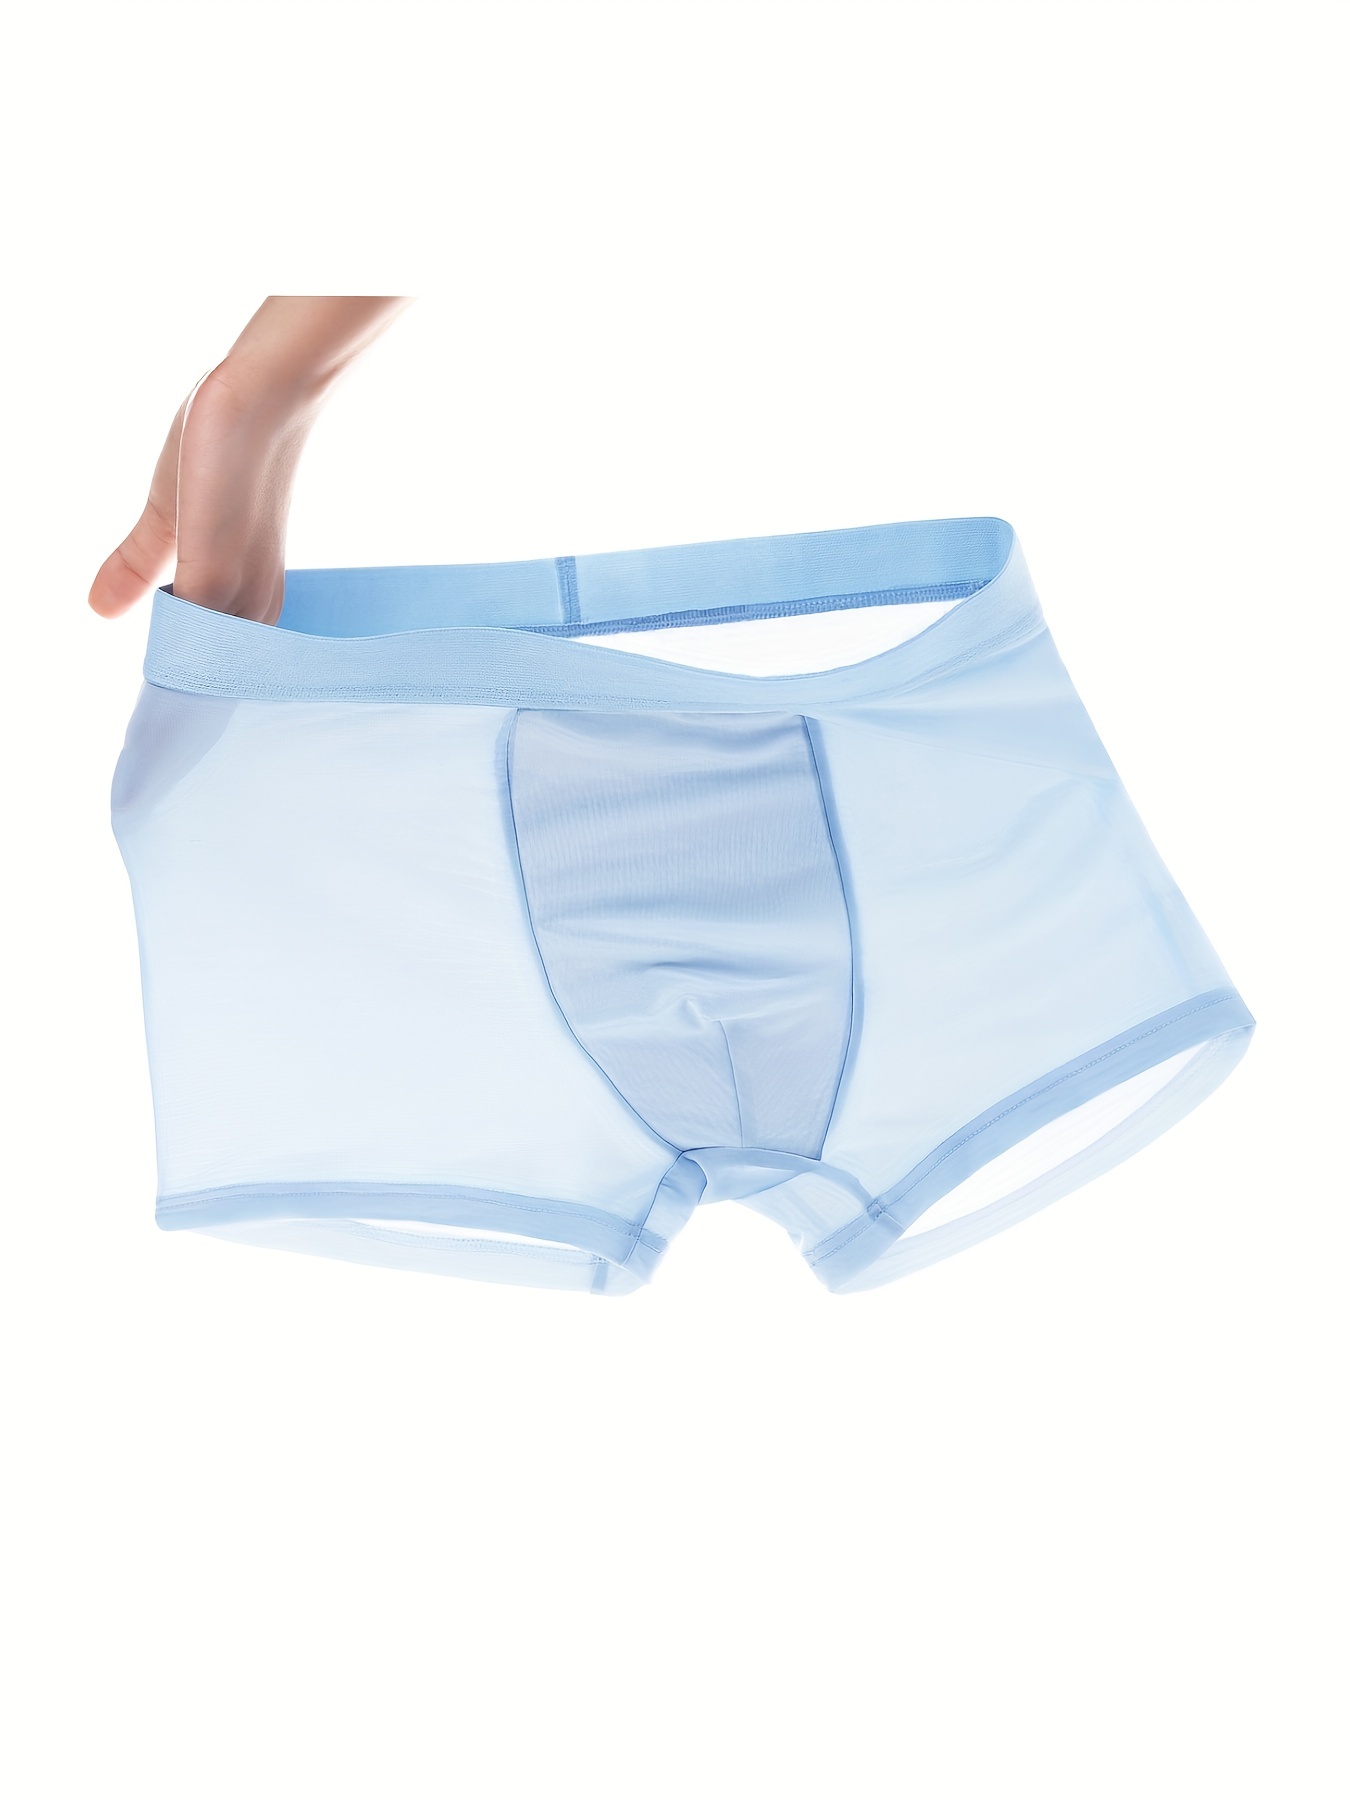 Pack of 5Pcs Men's Boxer Shorts 100% Linen Organic Eco Friendly Underwear  Trunks